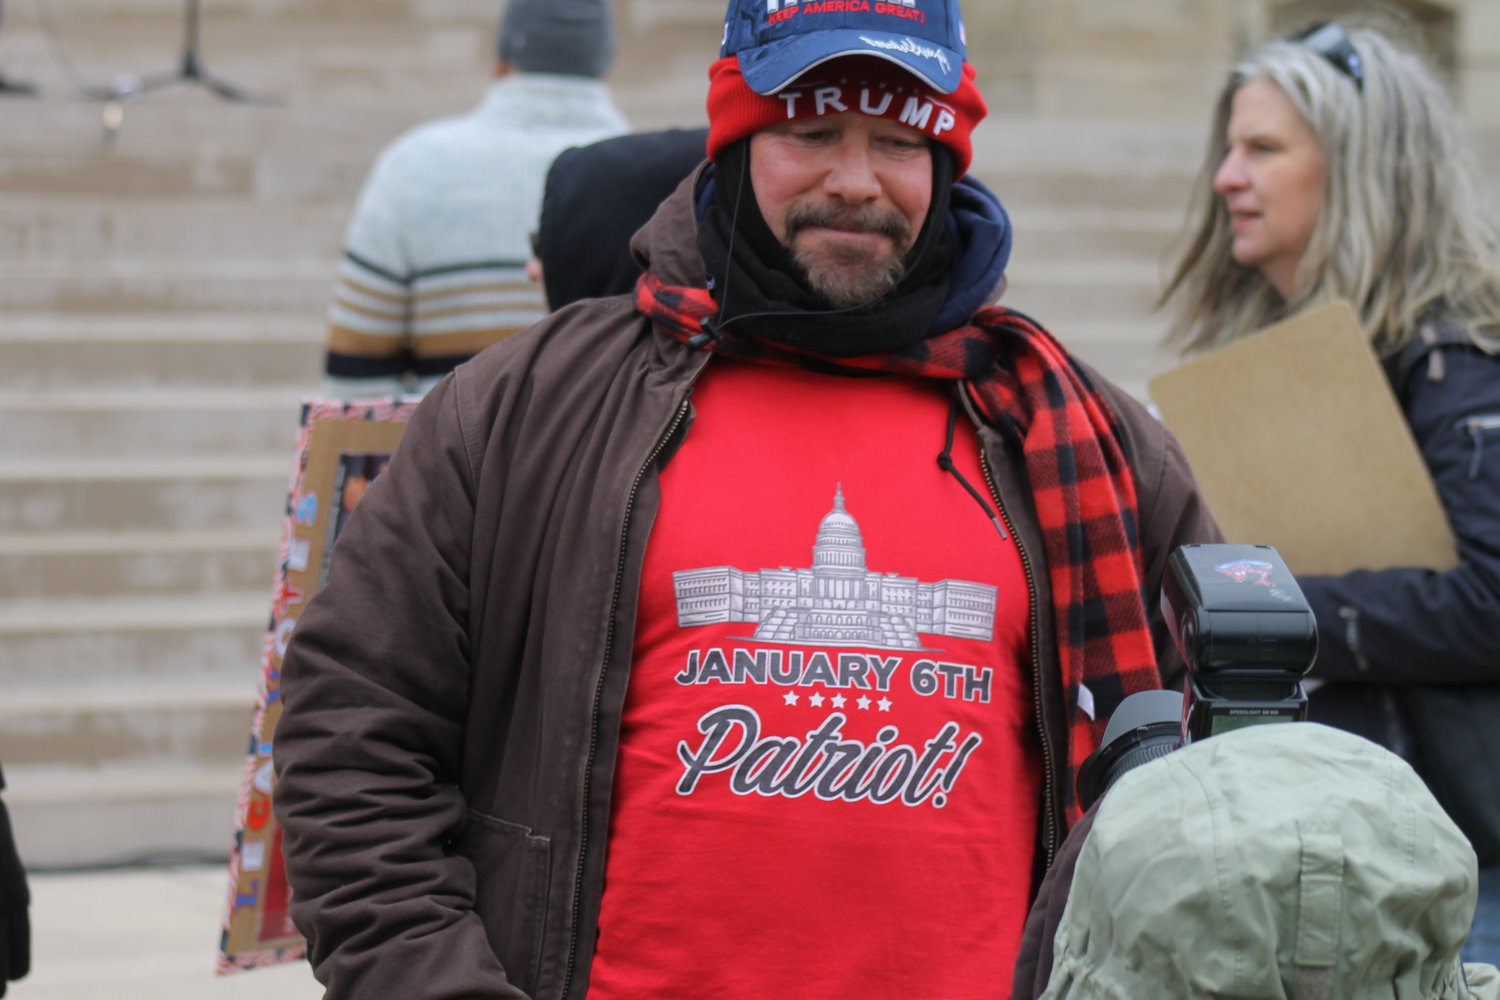 A man poses with a "Jan. 6 Patriot" shirt.